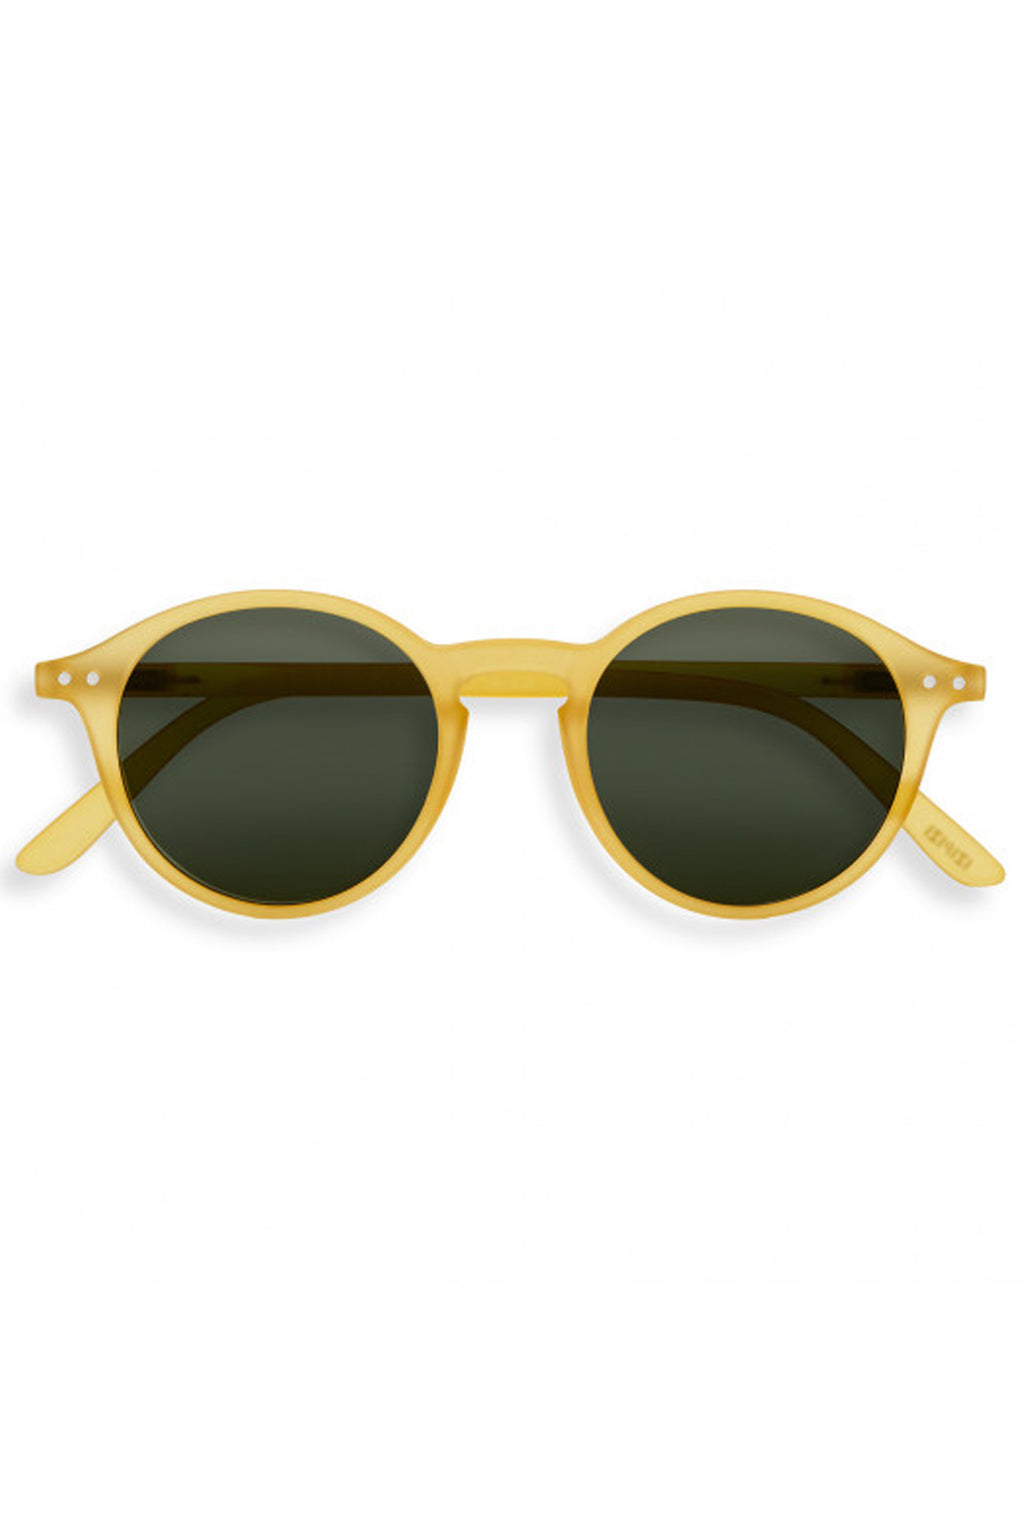 IZIPIZI #D Yellow Honey Sunglasses - The Mercantile London